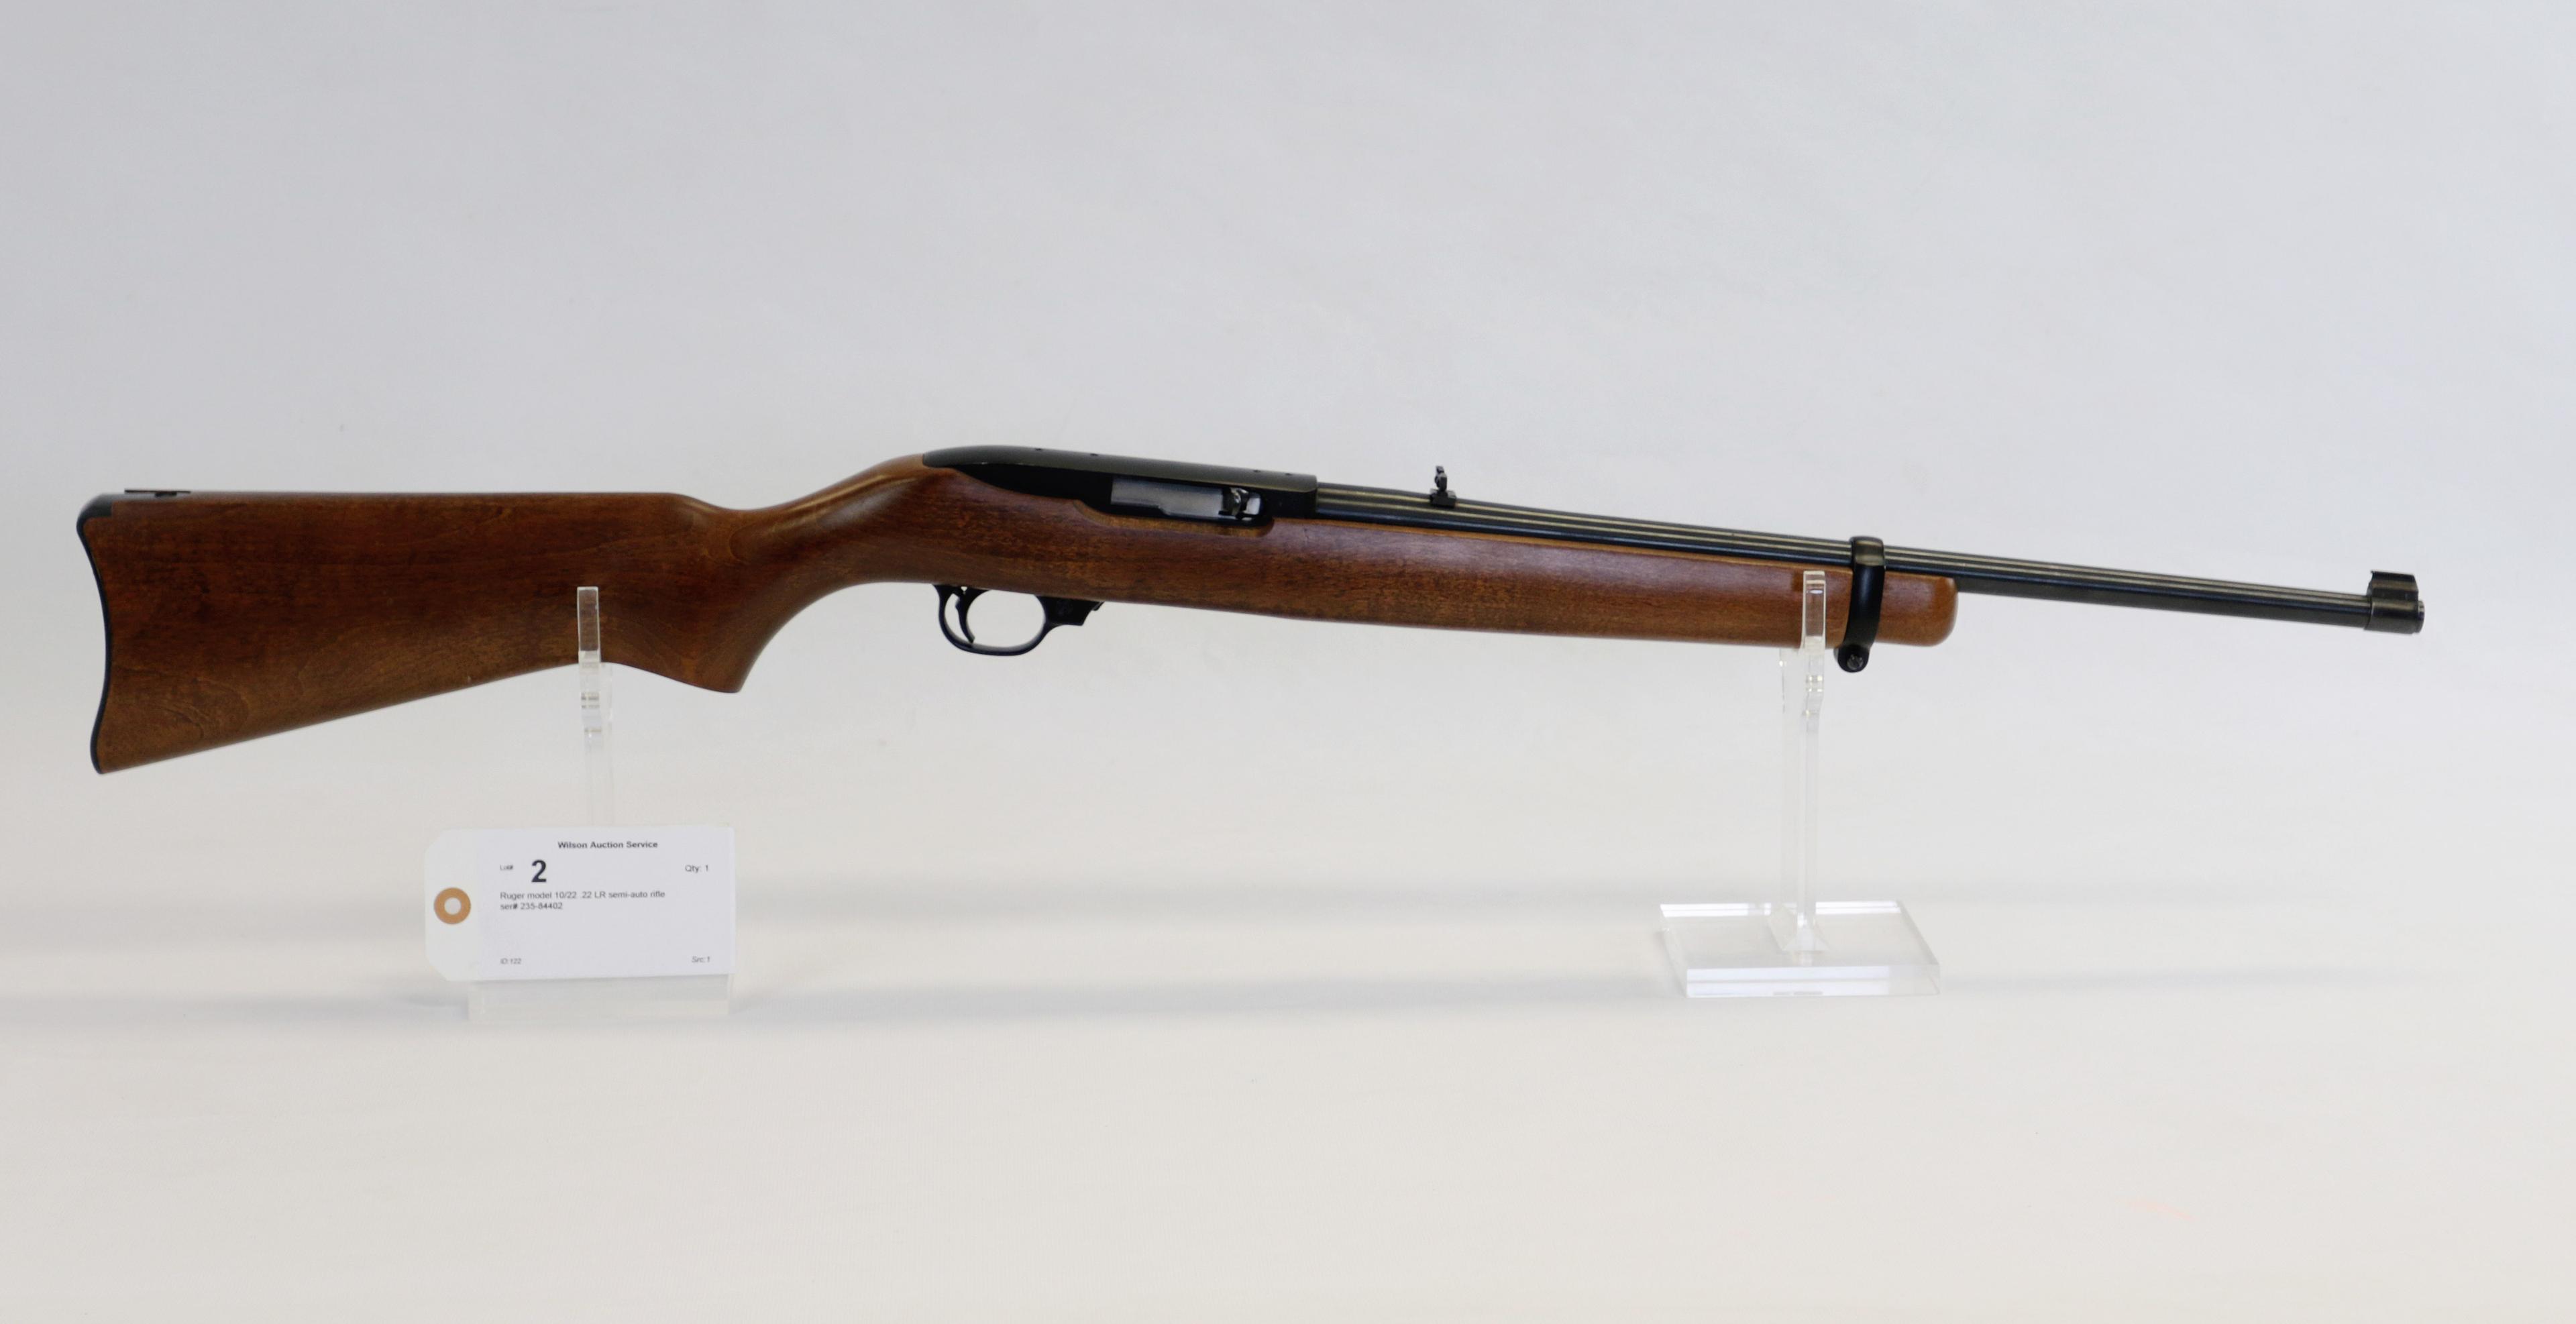 Ruger model 10/22 .22 LR semi-auto rifle